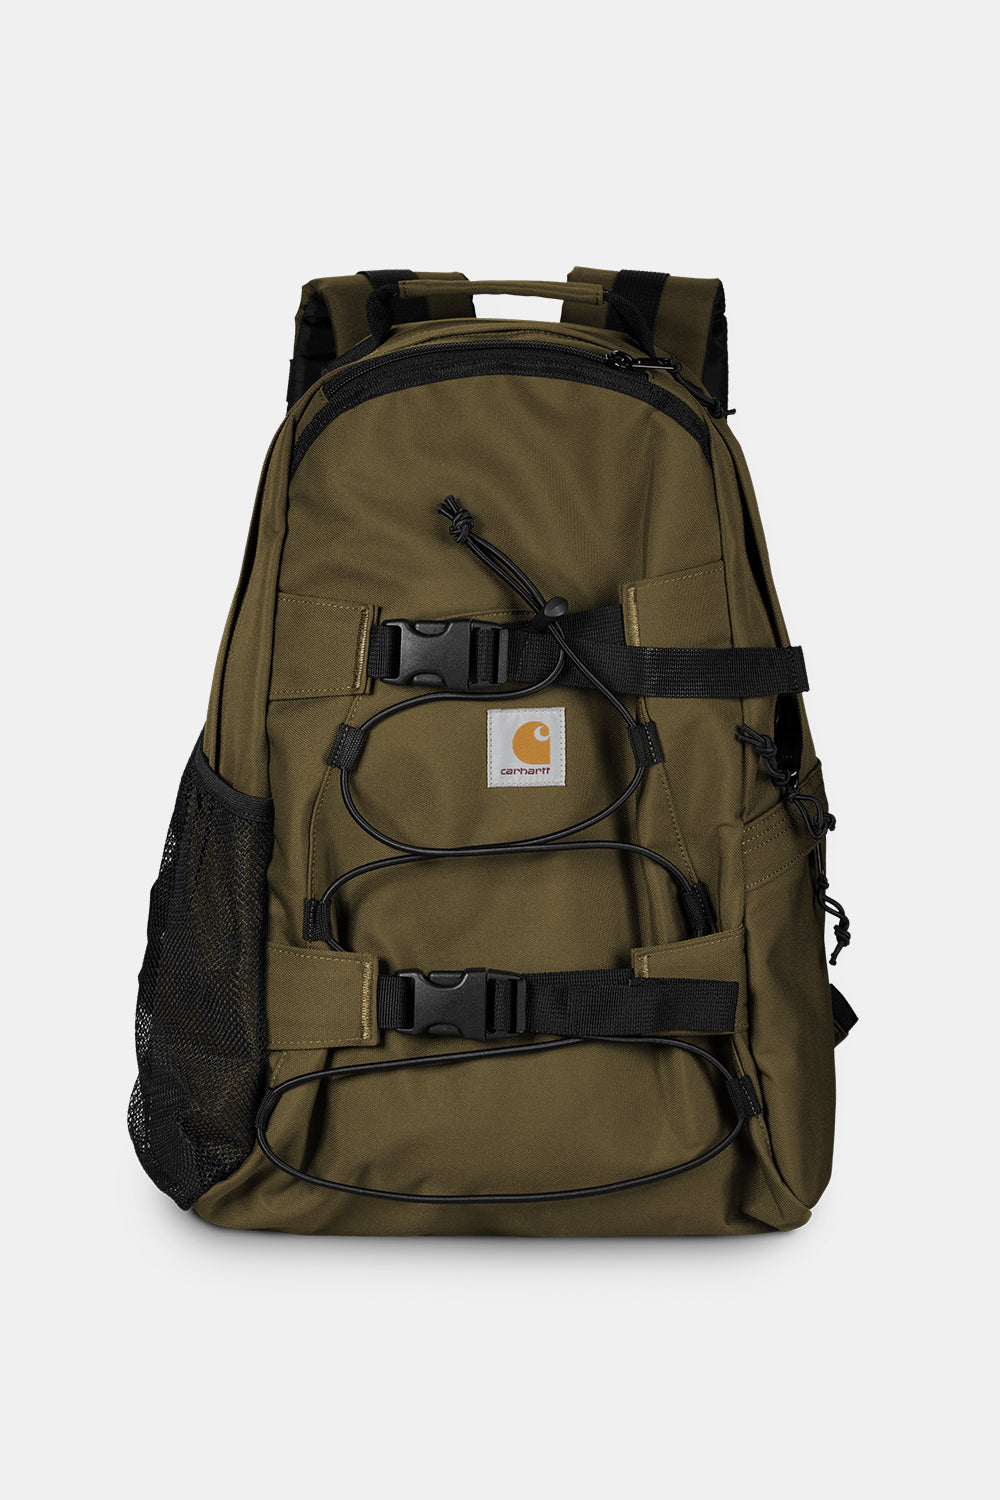 Carhartt WIP Kickflip Backpack (Highland Green)